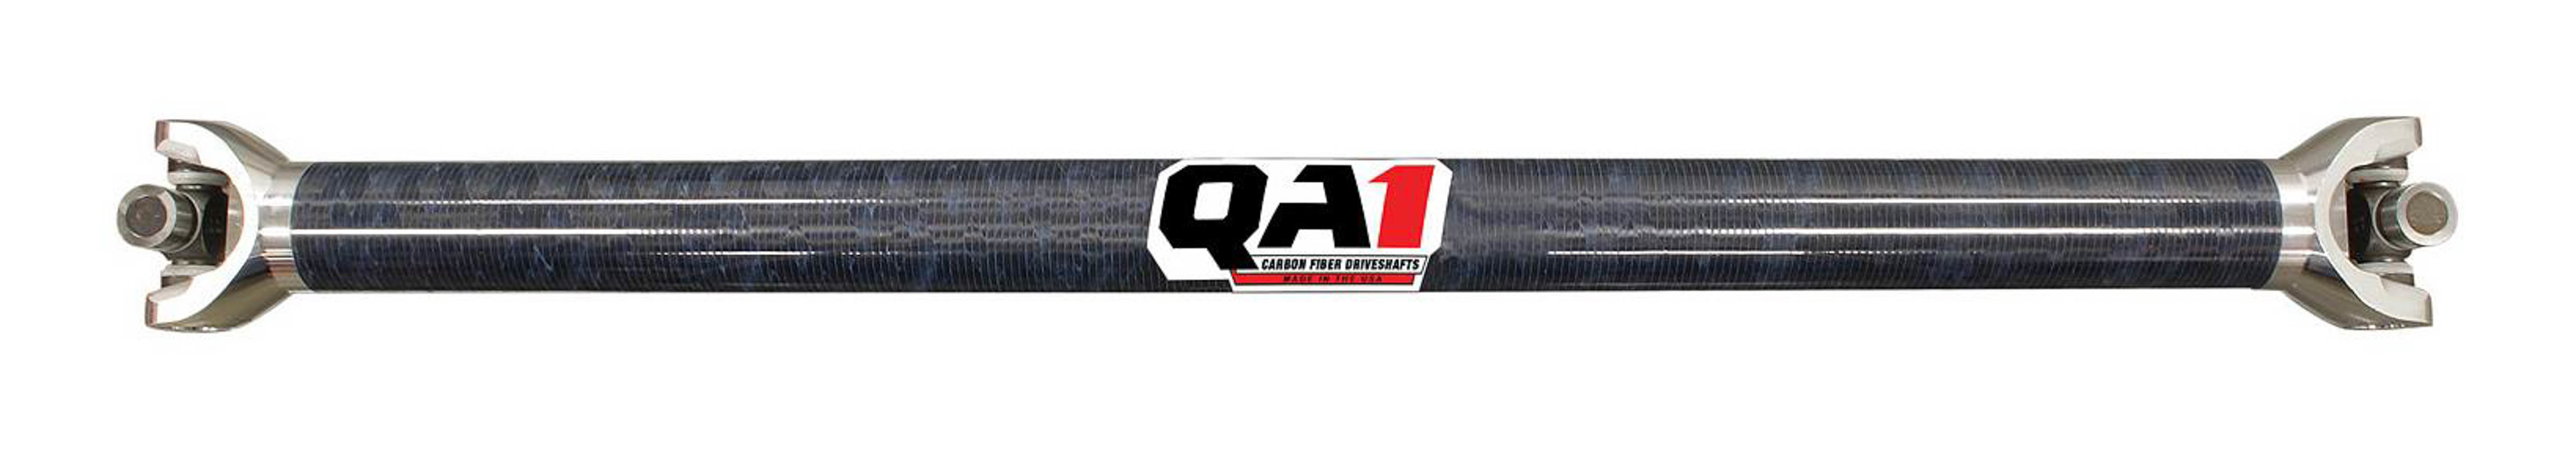 QA1 JJ-11246 Drive Shaft, Dirt Late Model, 34.5 in Long, 2.25 in OD, 1310 U-Joints, Carbon Fiber, Universal, Each